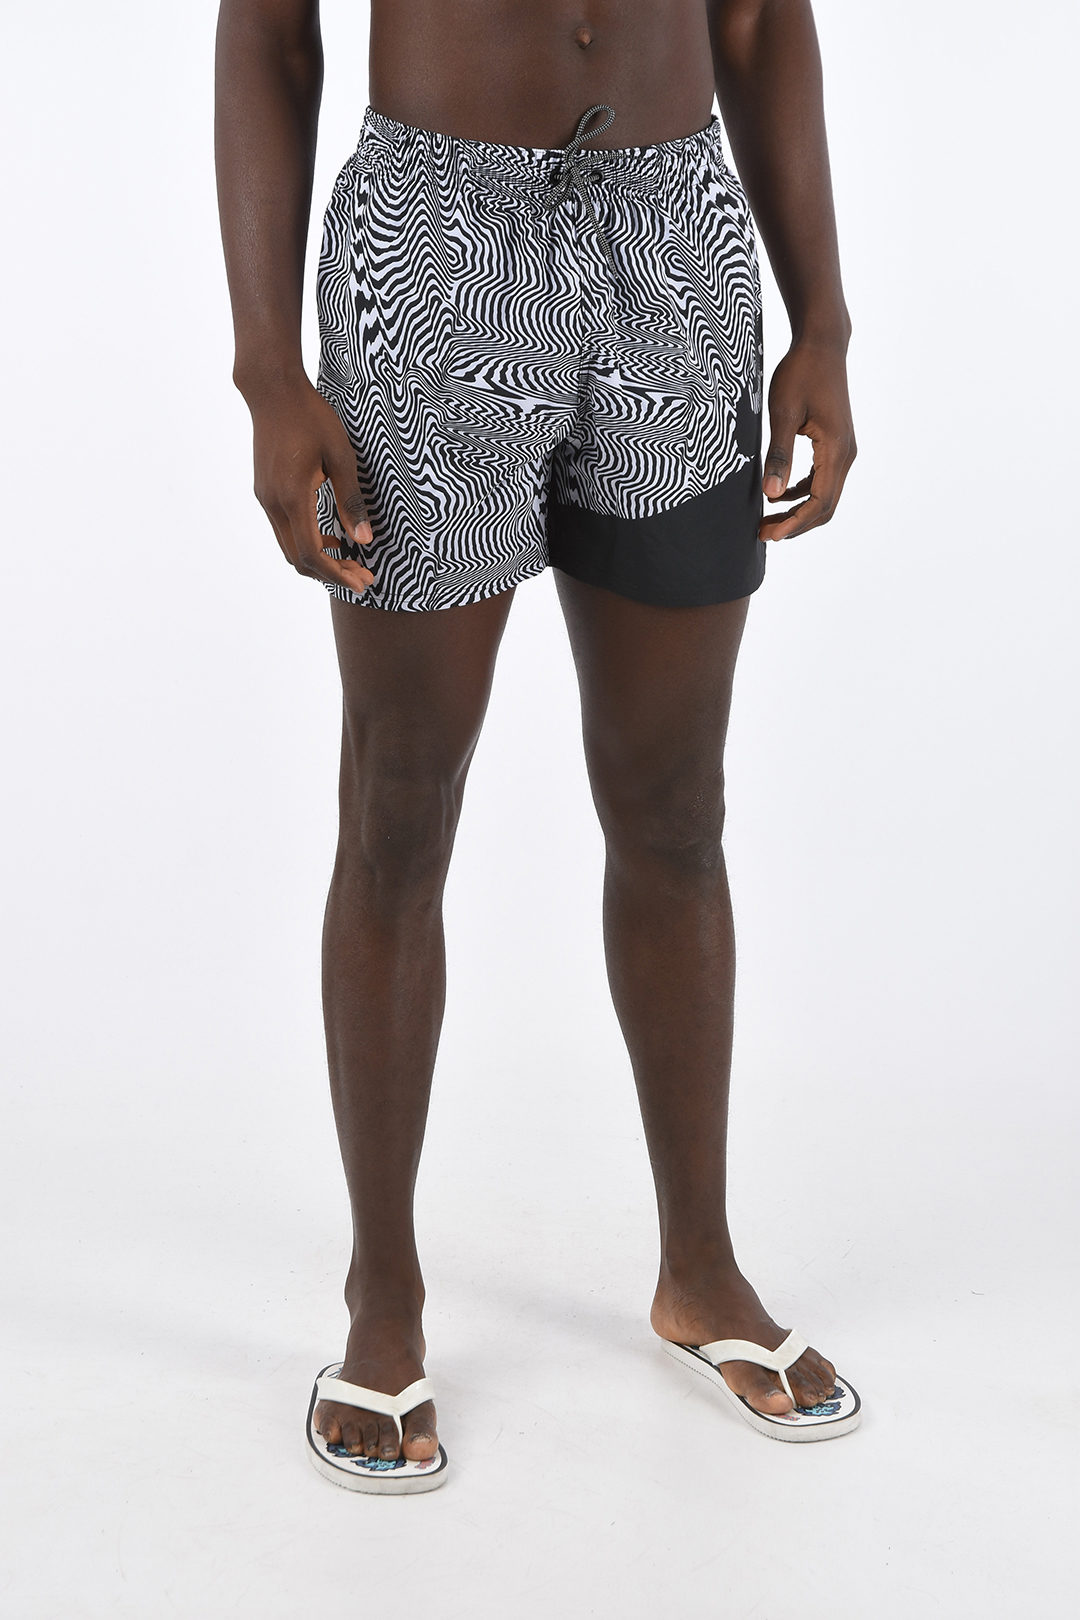 ongerustheid zelfmoord Laptop Nike Zebra Printed Boxer Swimsuit men - Glamood Outlet